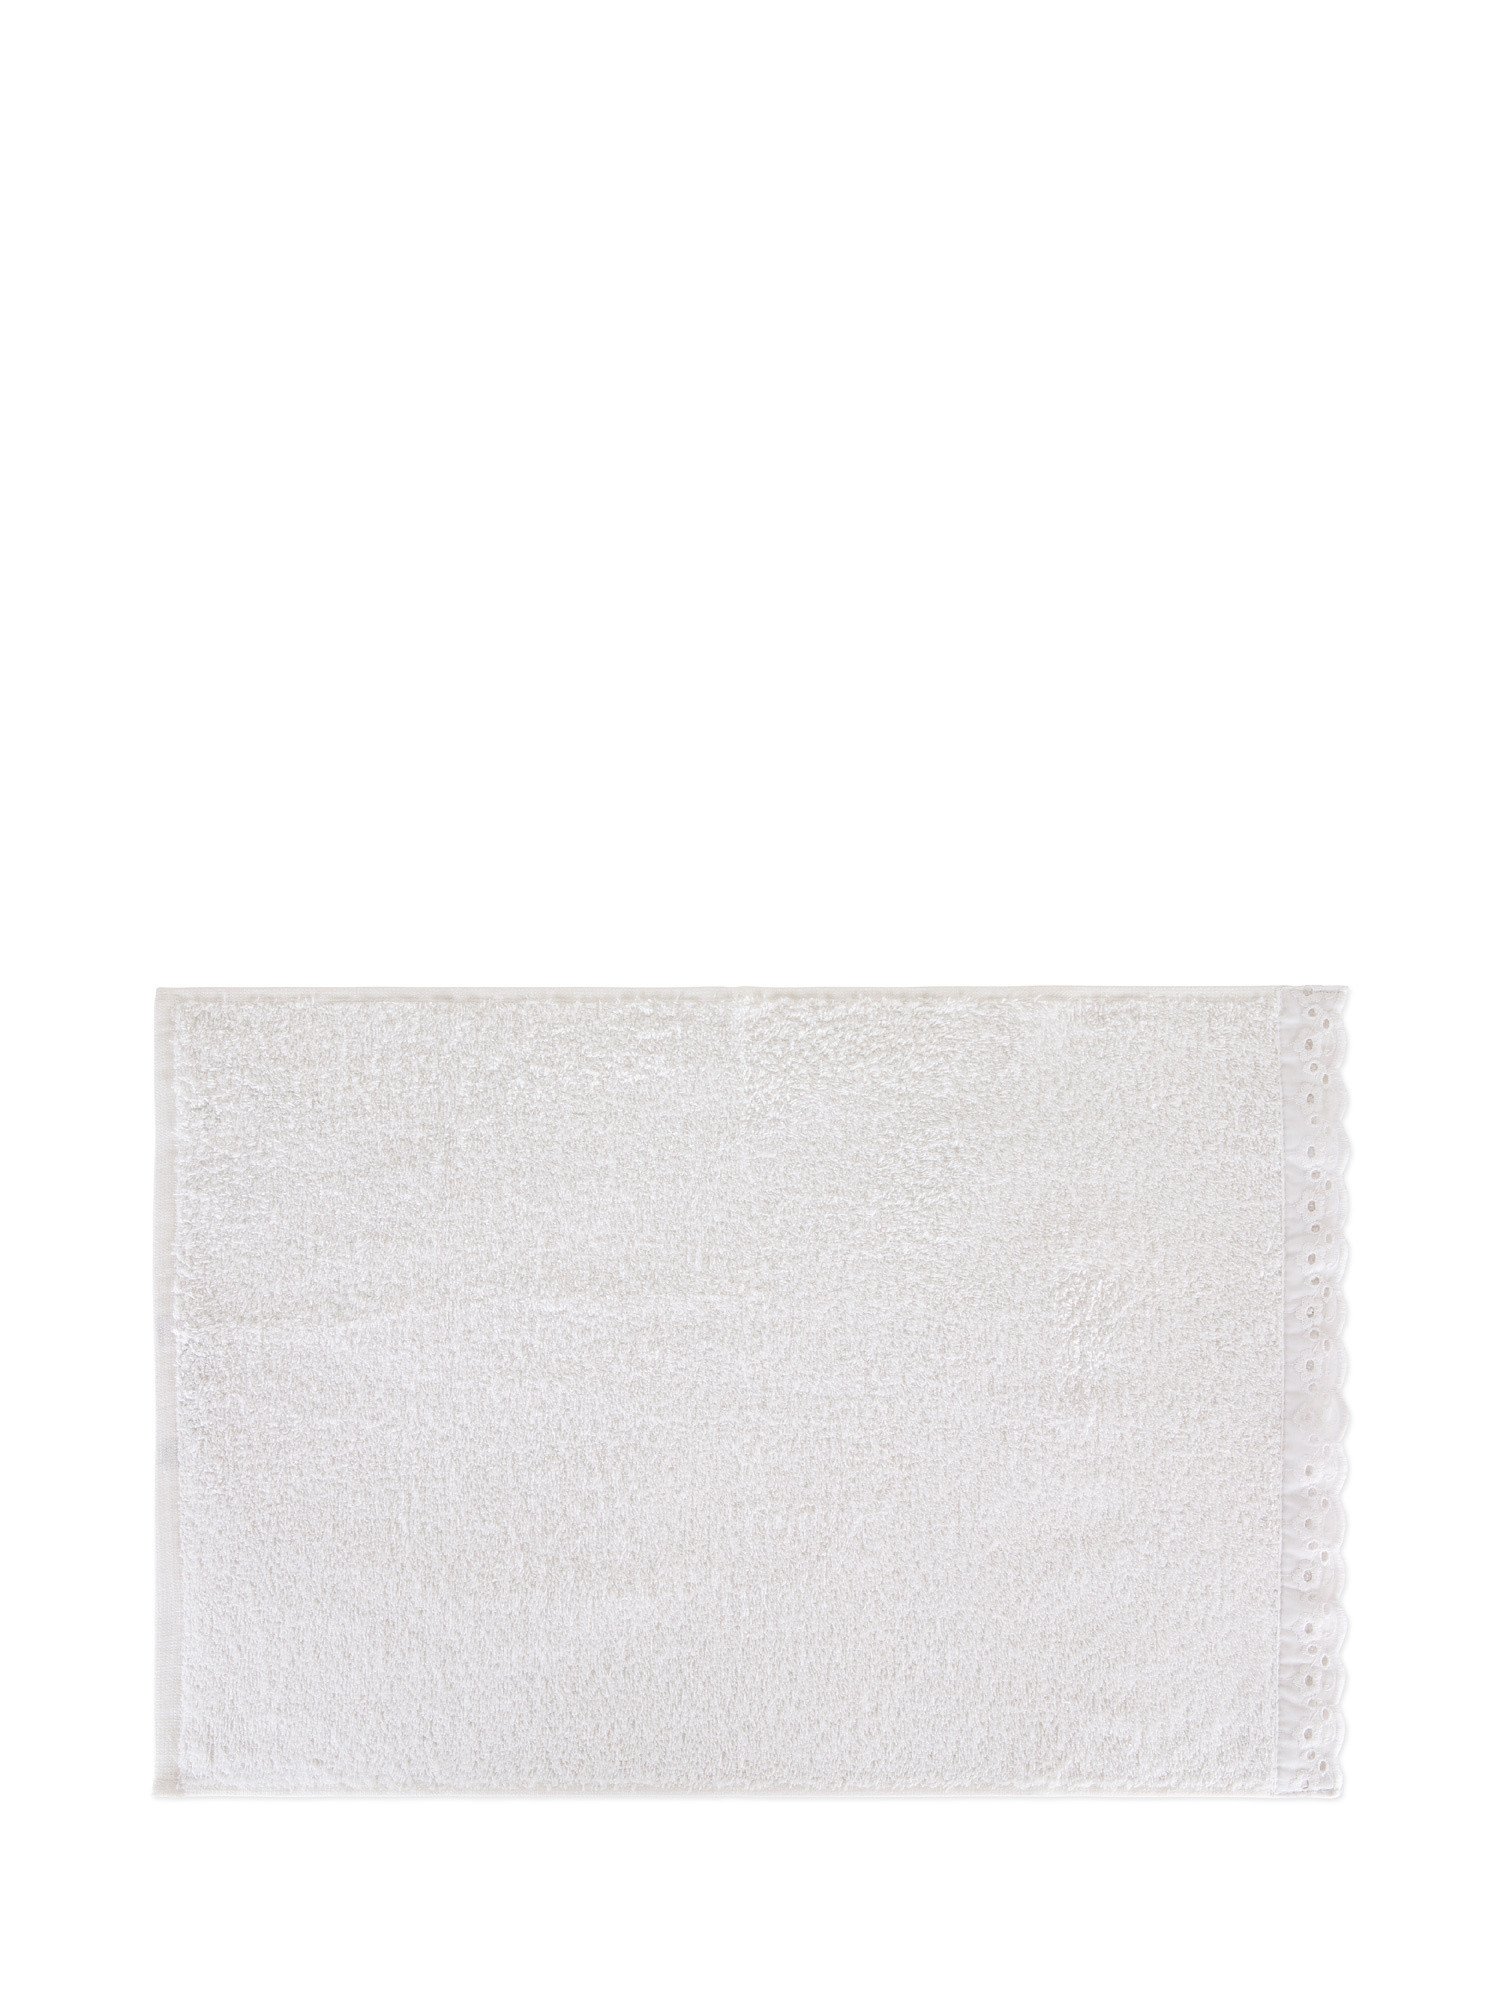 Asciugamano spugna di cotone bordo sangallo, Bianco, large image number 1